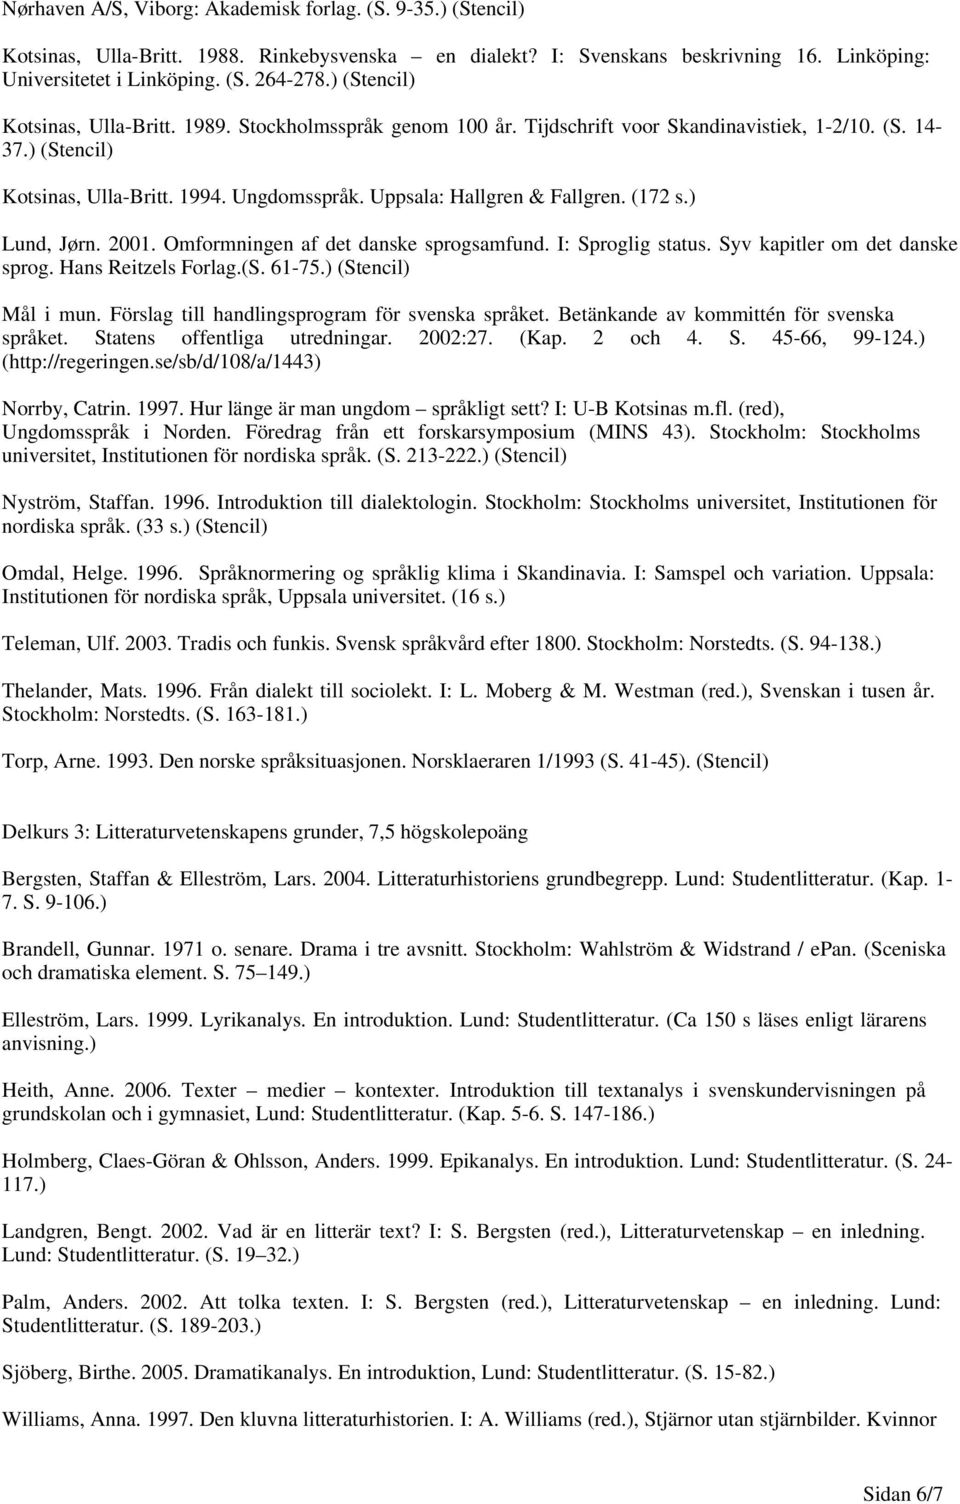 Uppsala: Hallgren & Fallgren. (172 s.) Lund, Jørn. 2001. Omformningen af det danske sprogsamfund. I: Sproglig status. Syv kapitler om det danske sprog. Hans Reitzels Forlag.(S. 61-75.